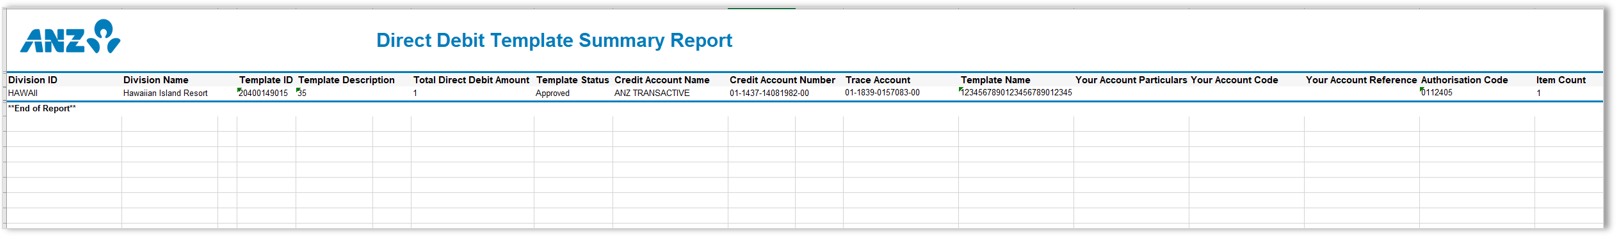 Report - Direct Debit Template Summary Report.png